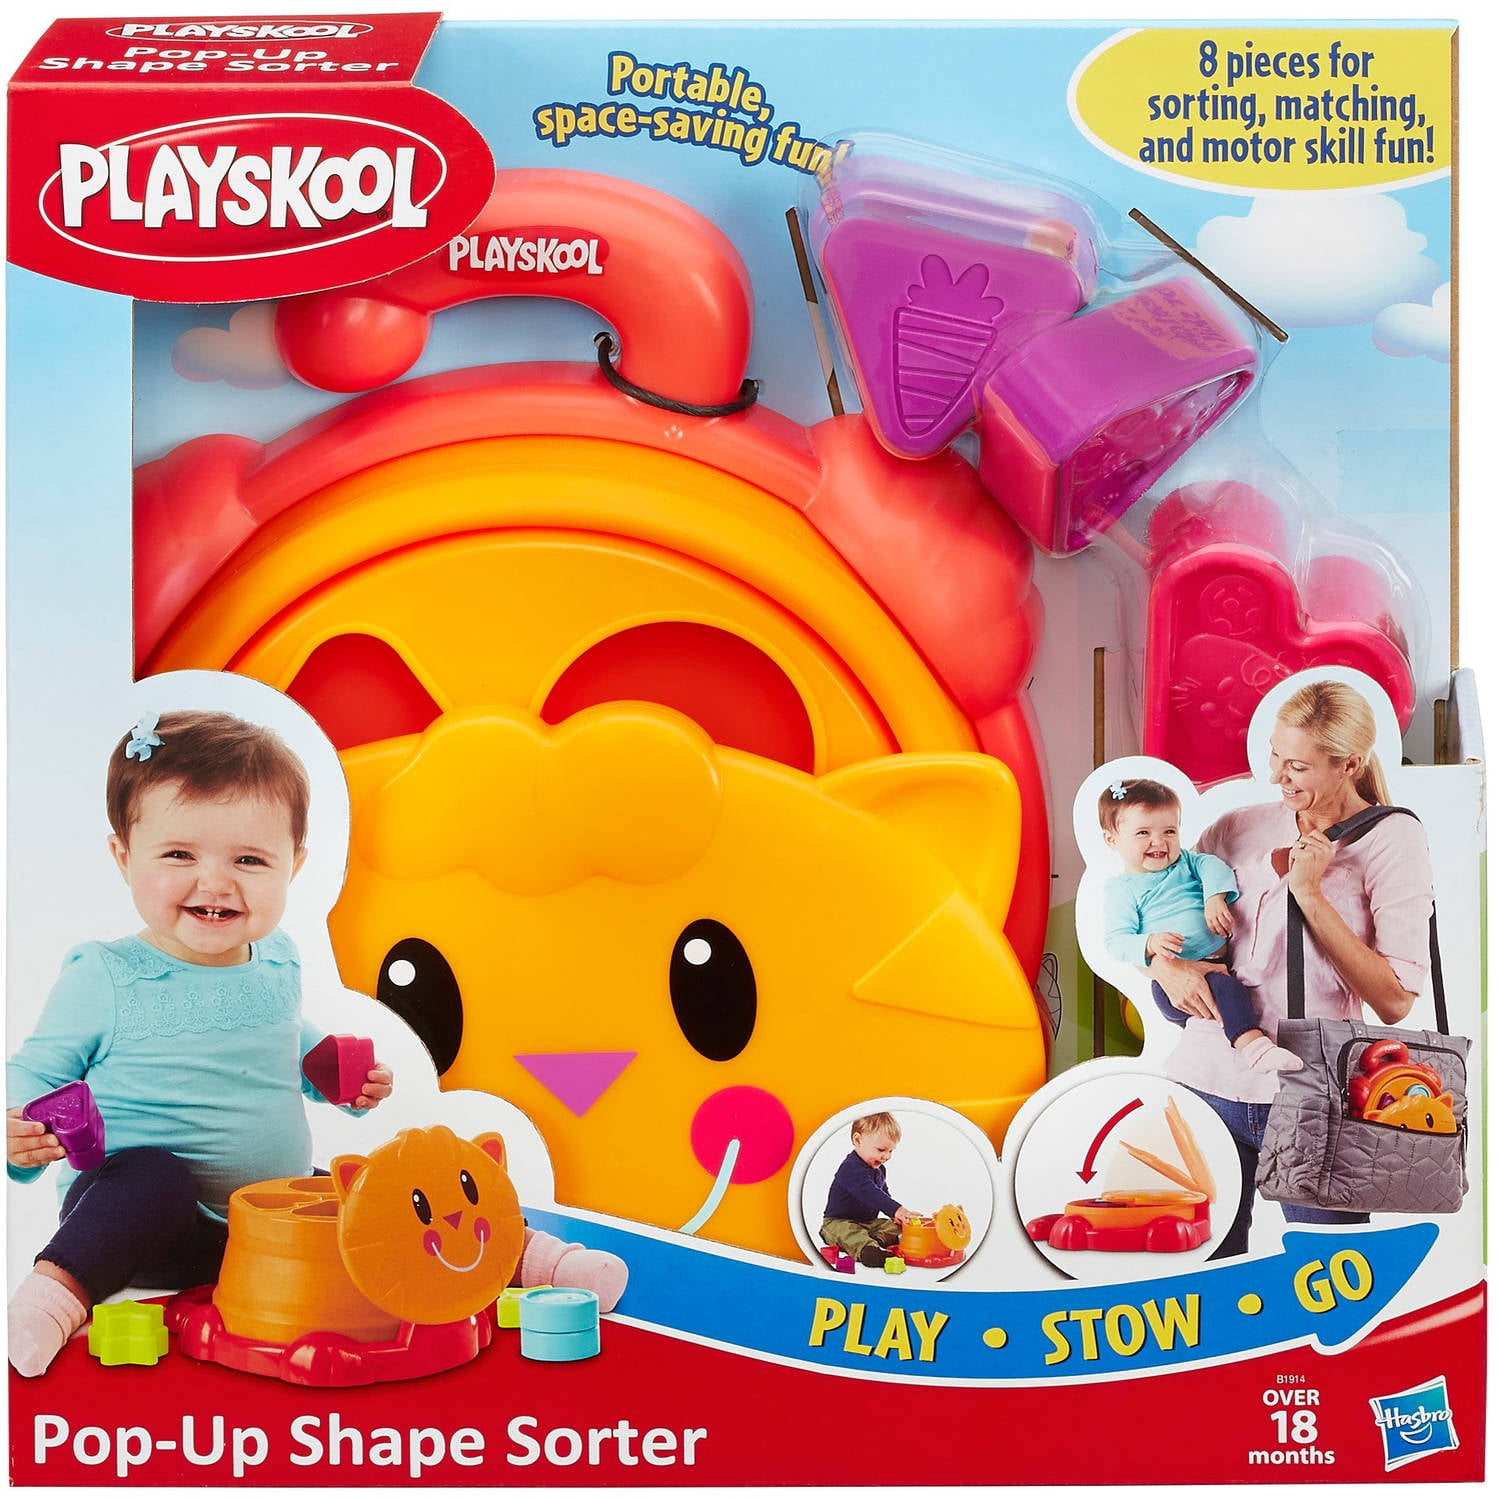 Playskool Pop-Up Shape Sorter